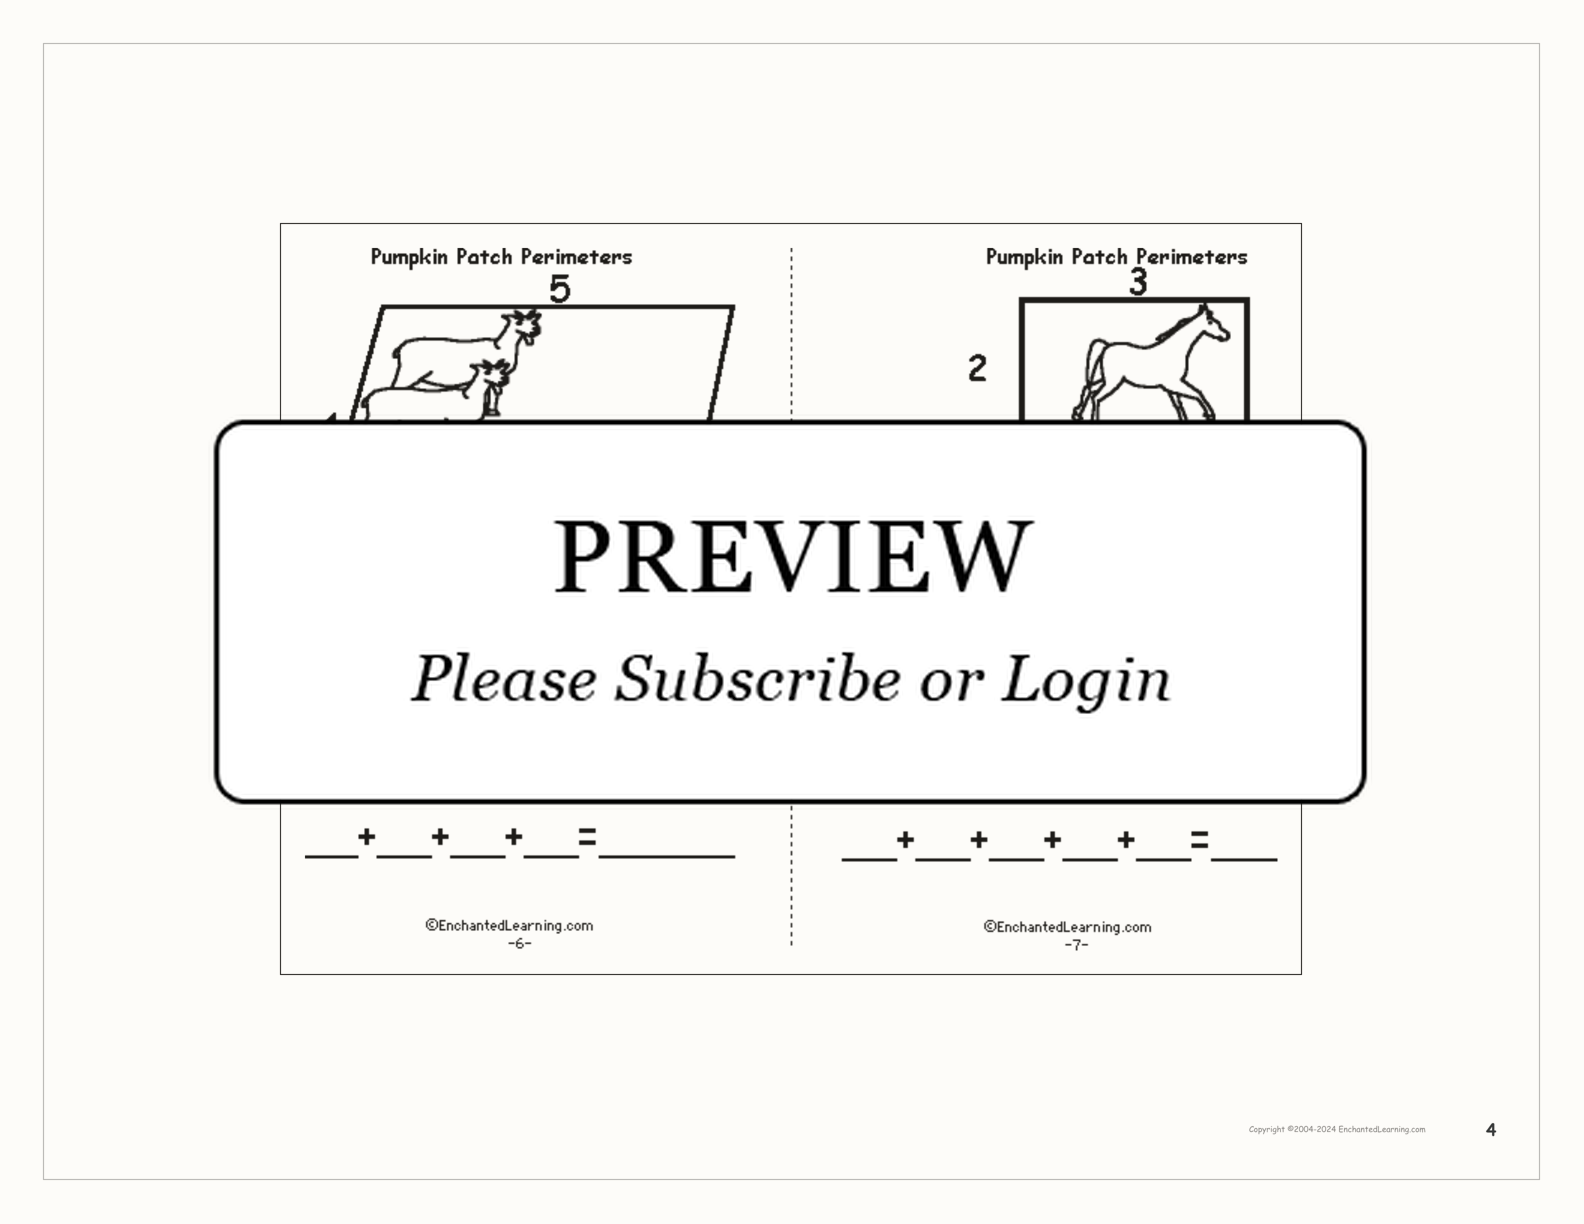 Pumpkin Patch Perimeters: A Printable Book interactive printout page 4